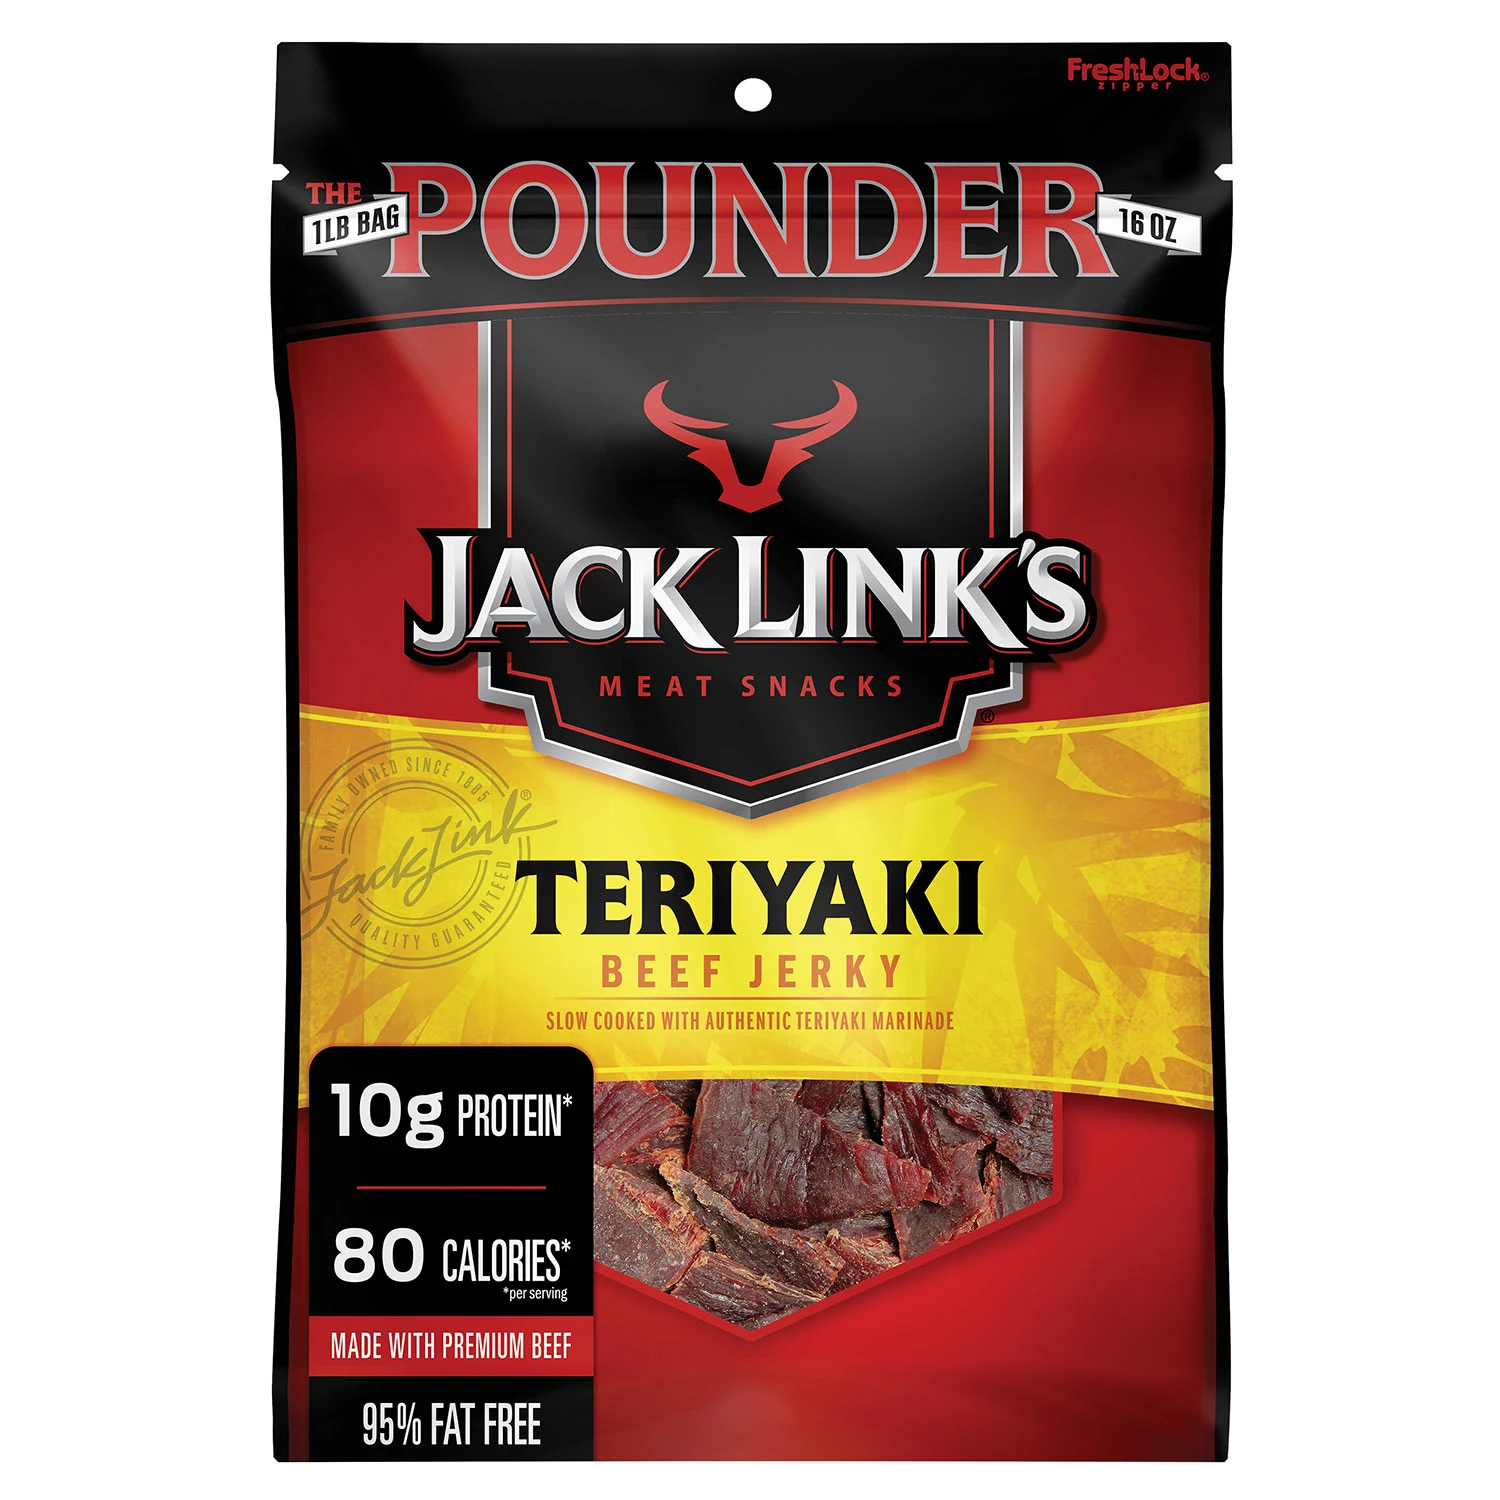 Jack Link’s Teriyaki Beef Jerky (16 oz.)